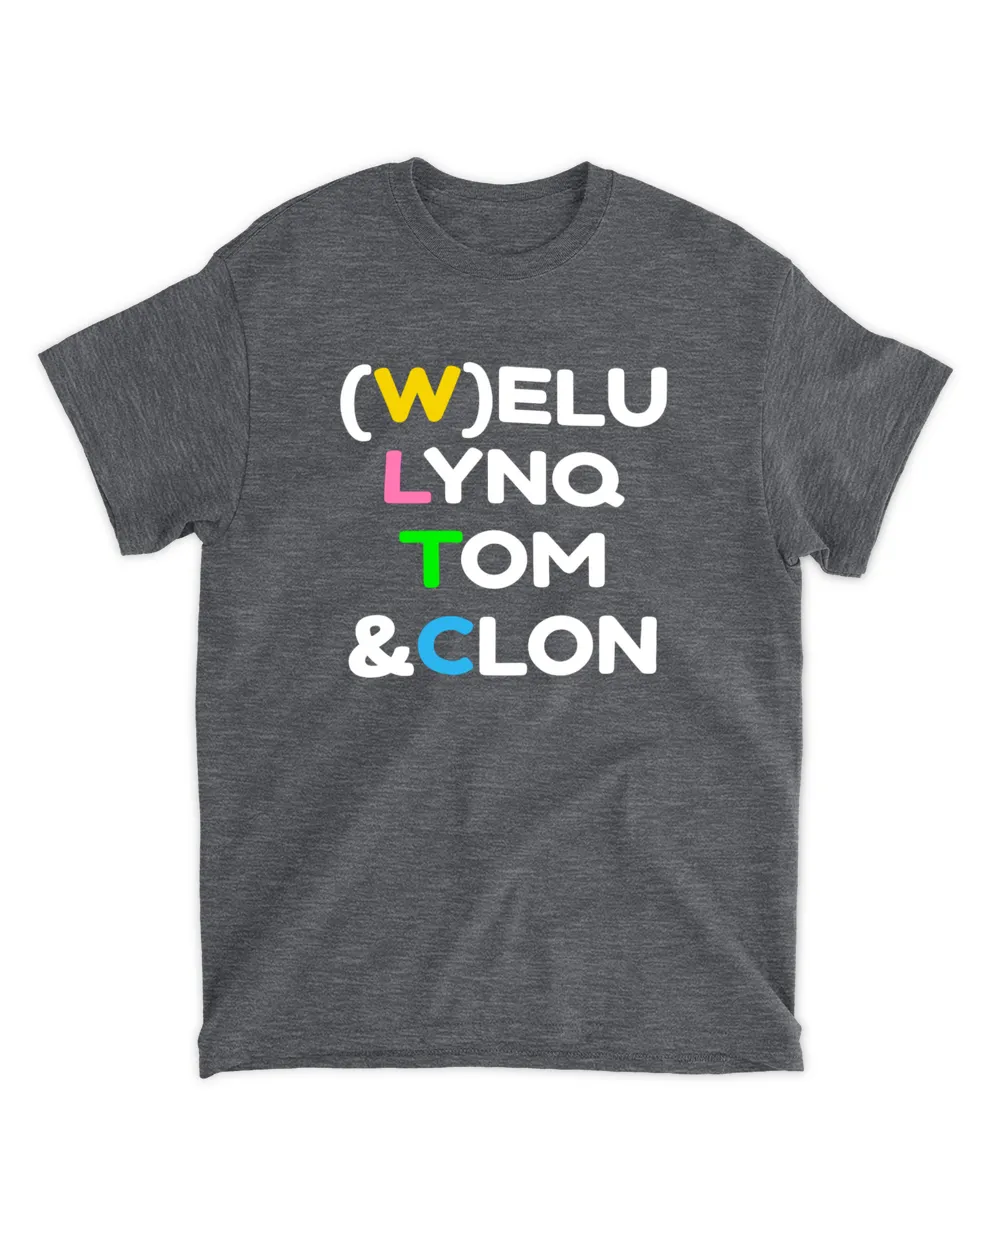 (W)Elu Lynq Tom & Clon Tee Shirt